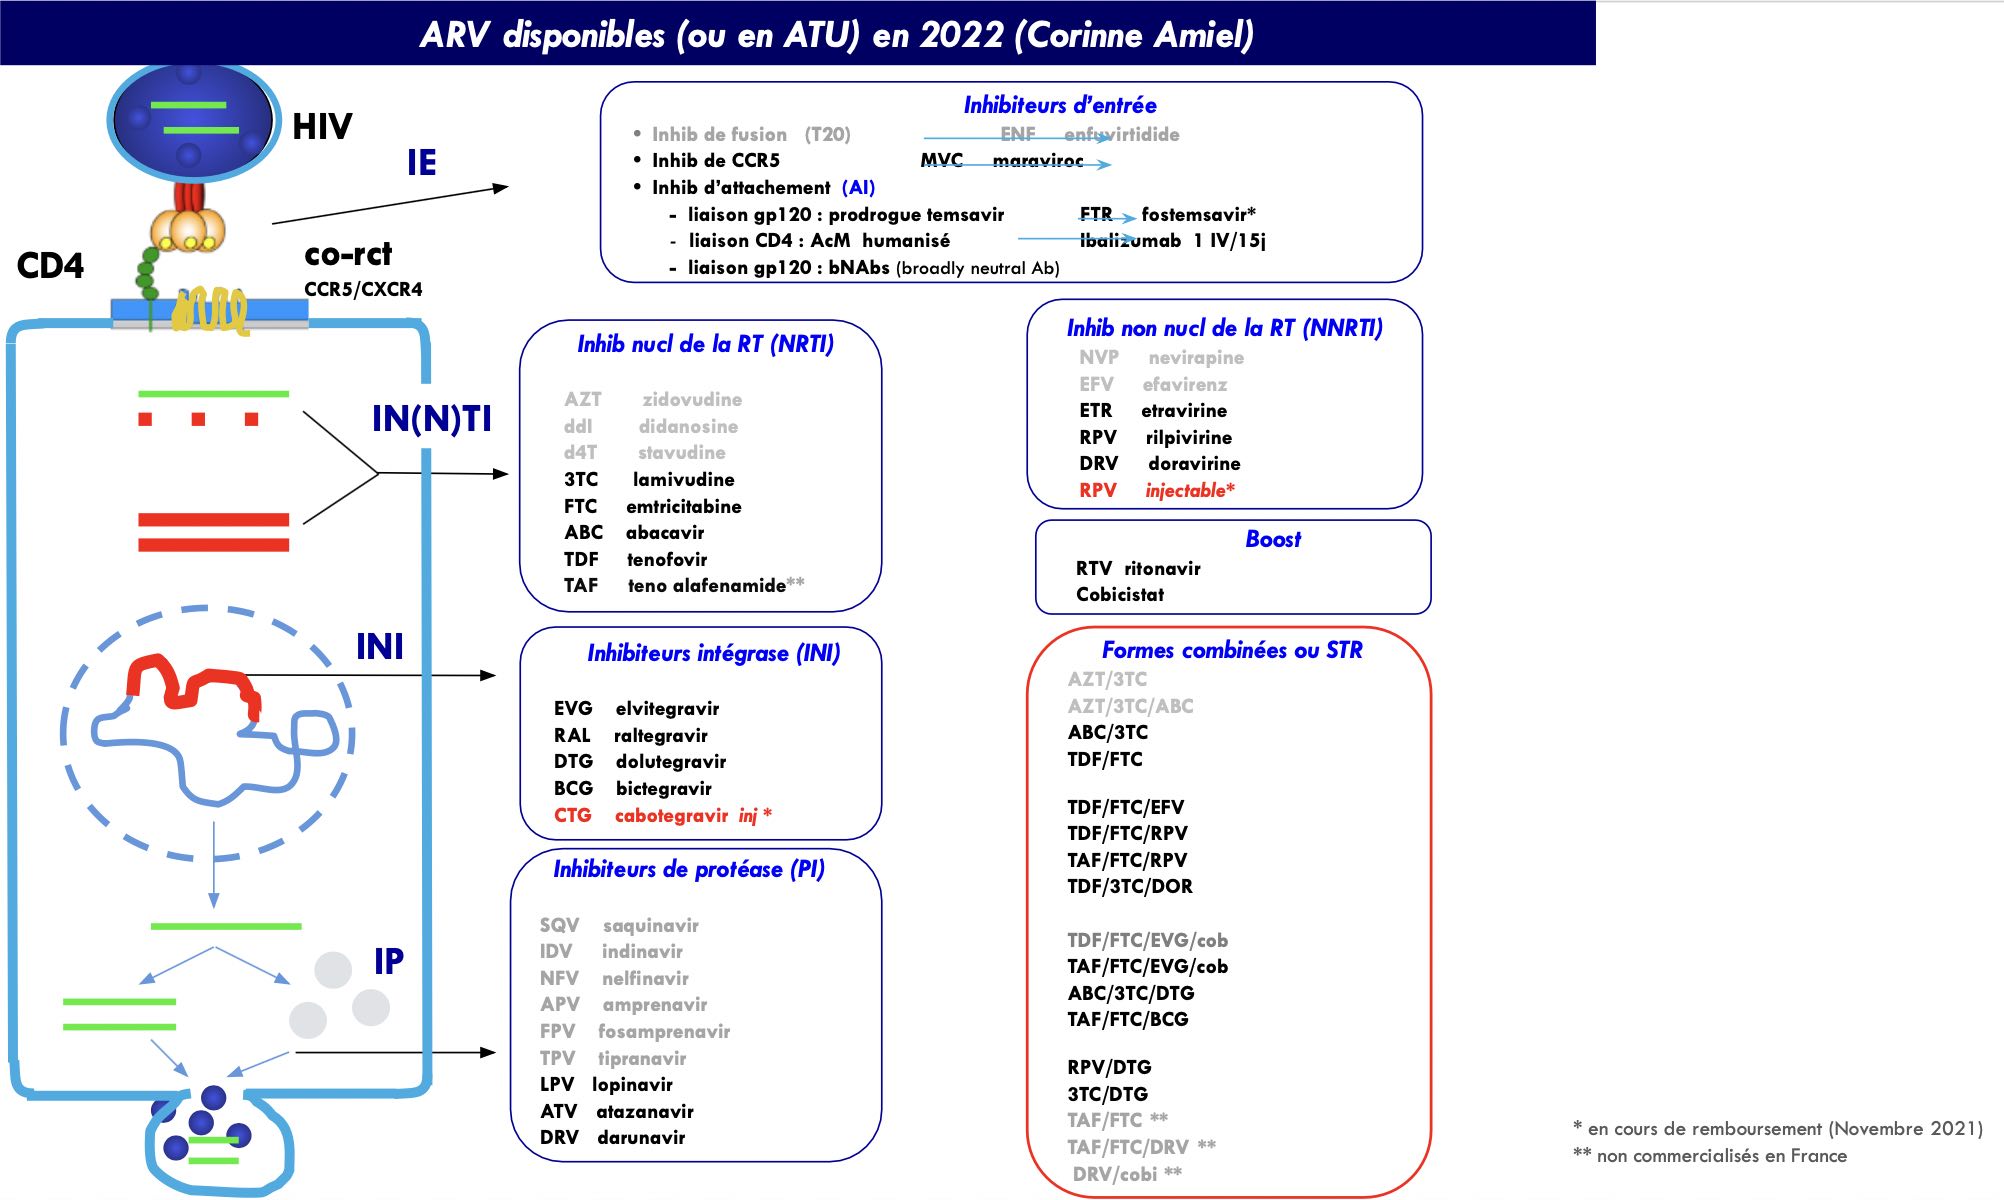 ARV disponibles(ou en ATU) en France